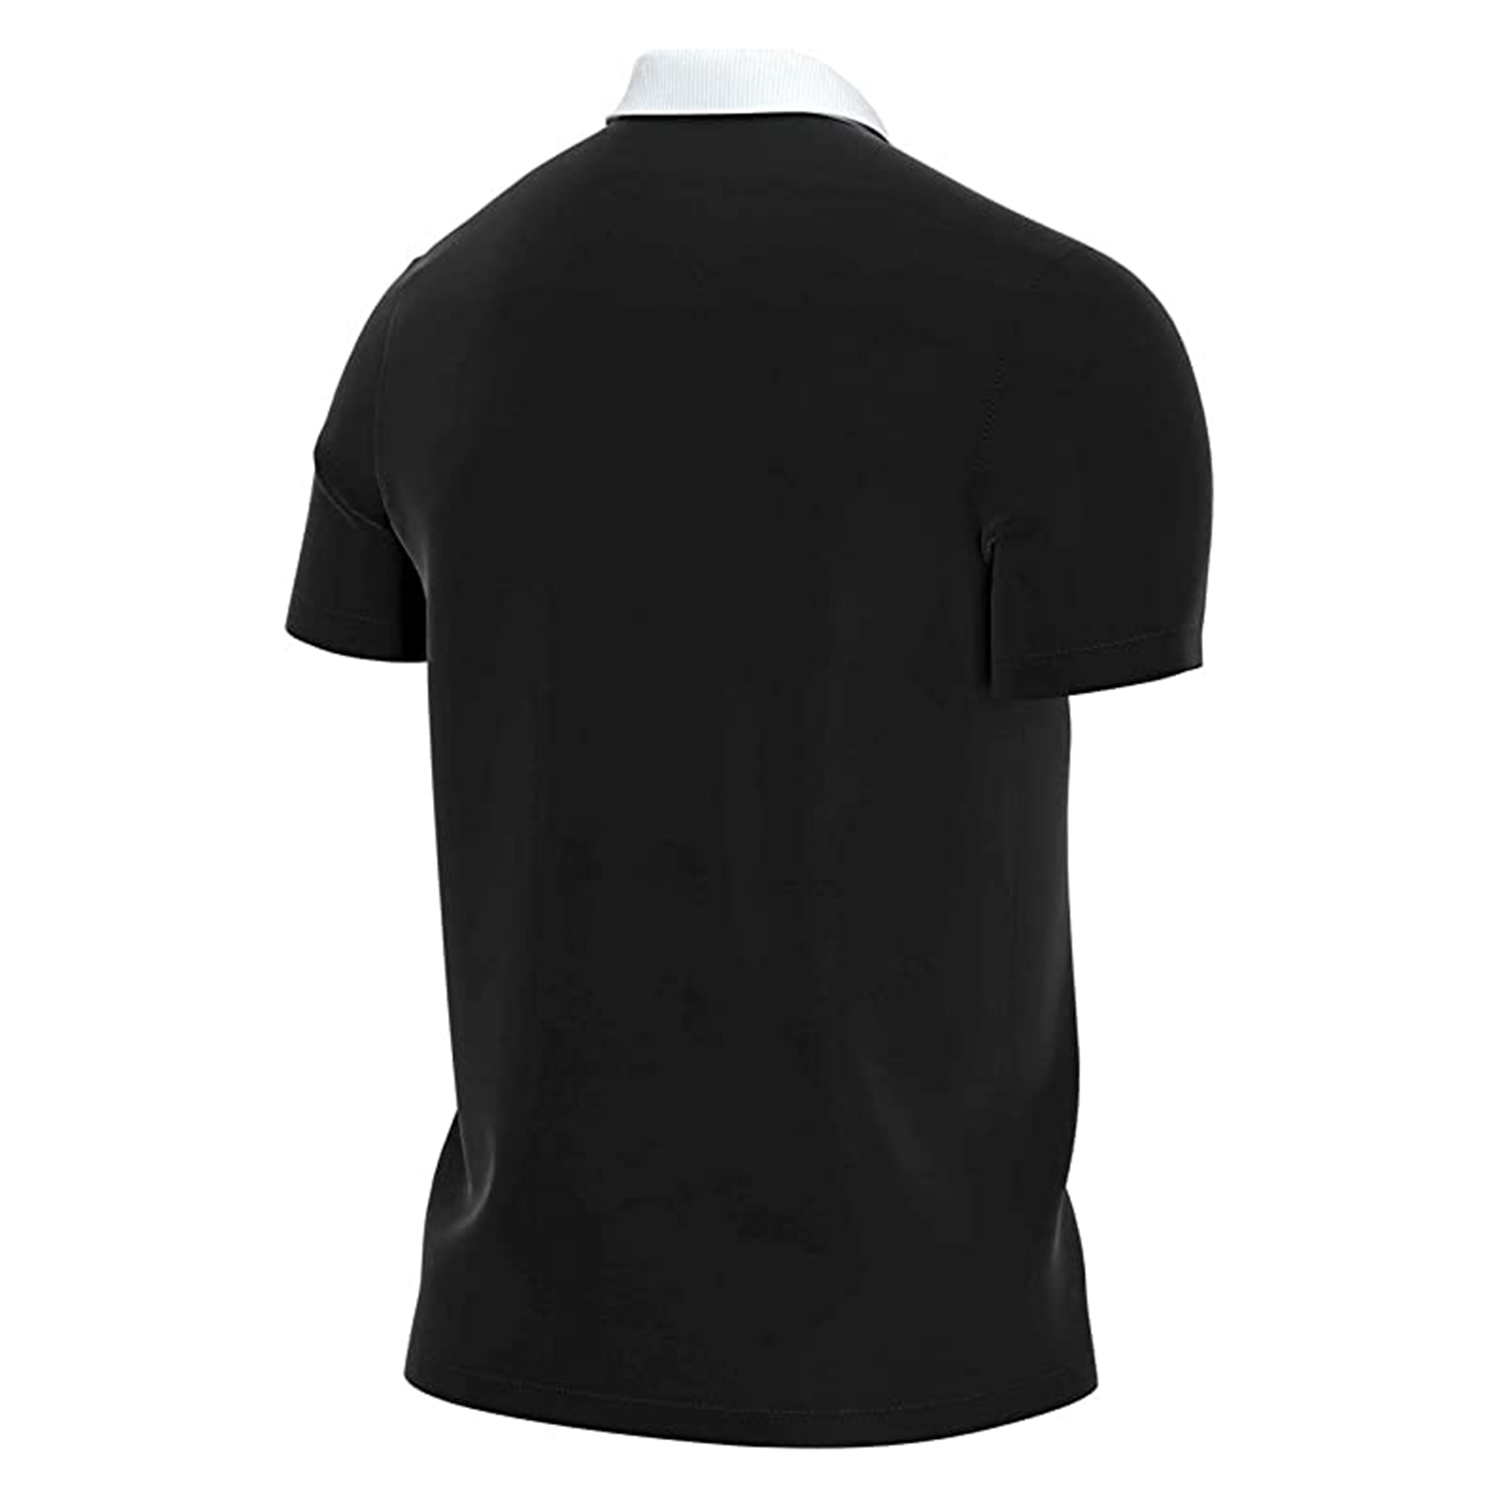 Nike Herren Poloshirt TEAM CLUB 20 Dri-FIT schwarz/weiss CW6933 010